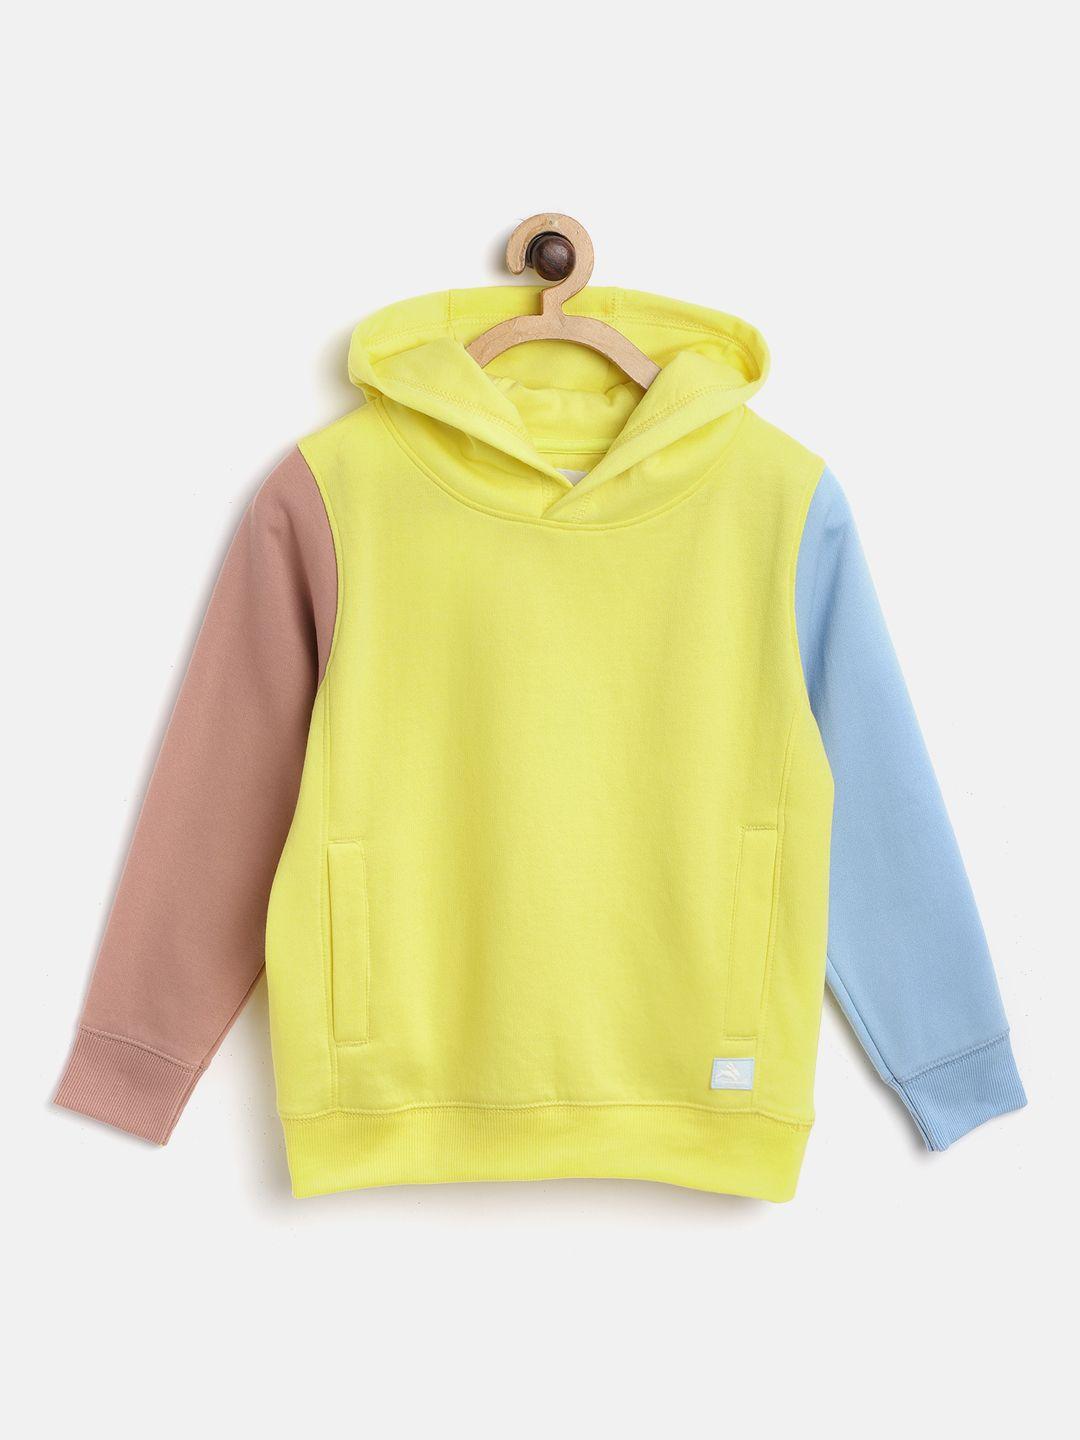 cherry crumble boys and girls yellow solid bloomberg colorblock hoodie sweatshirt